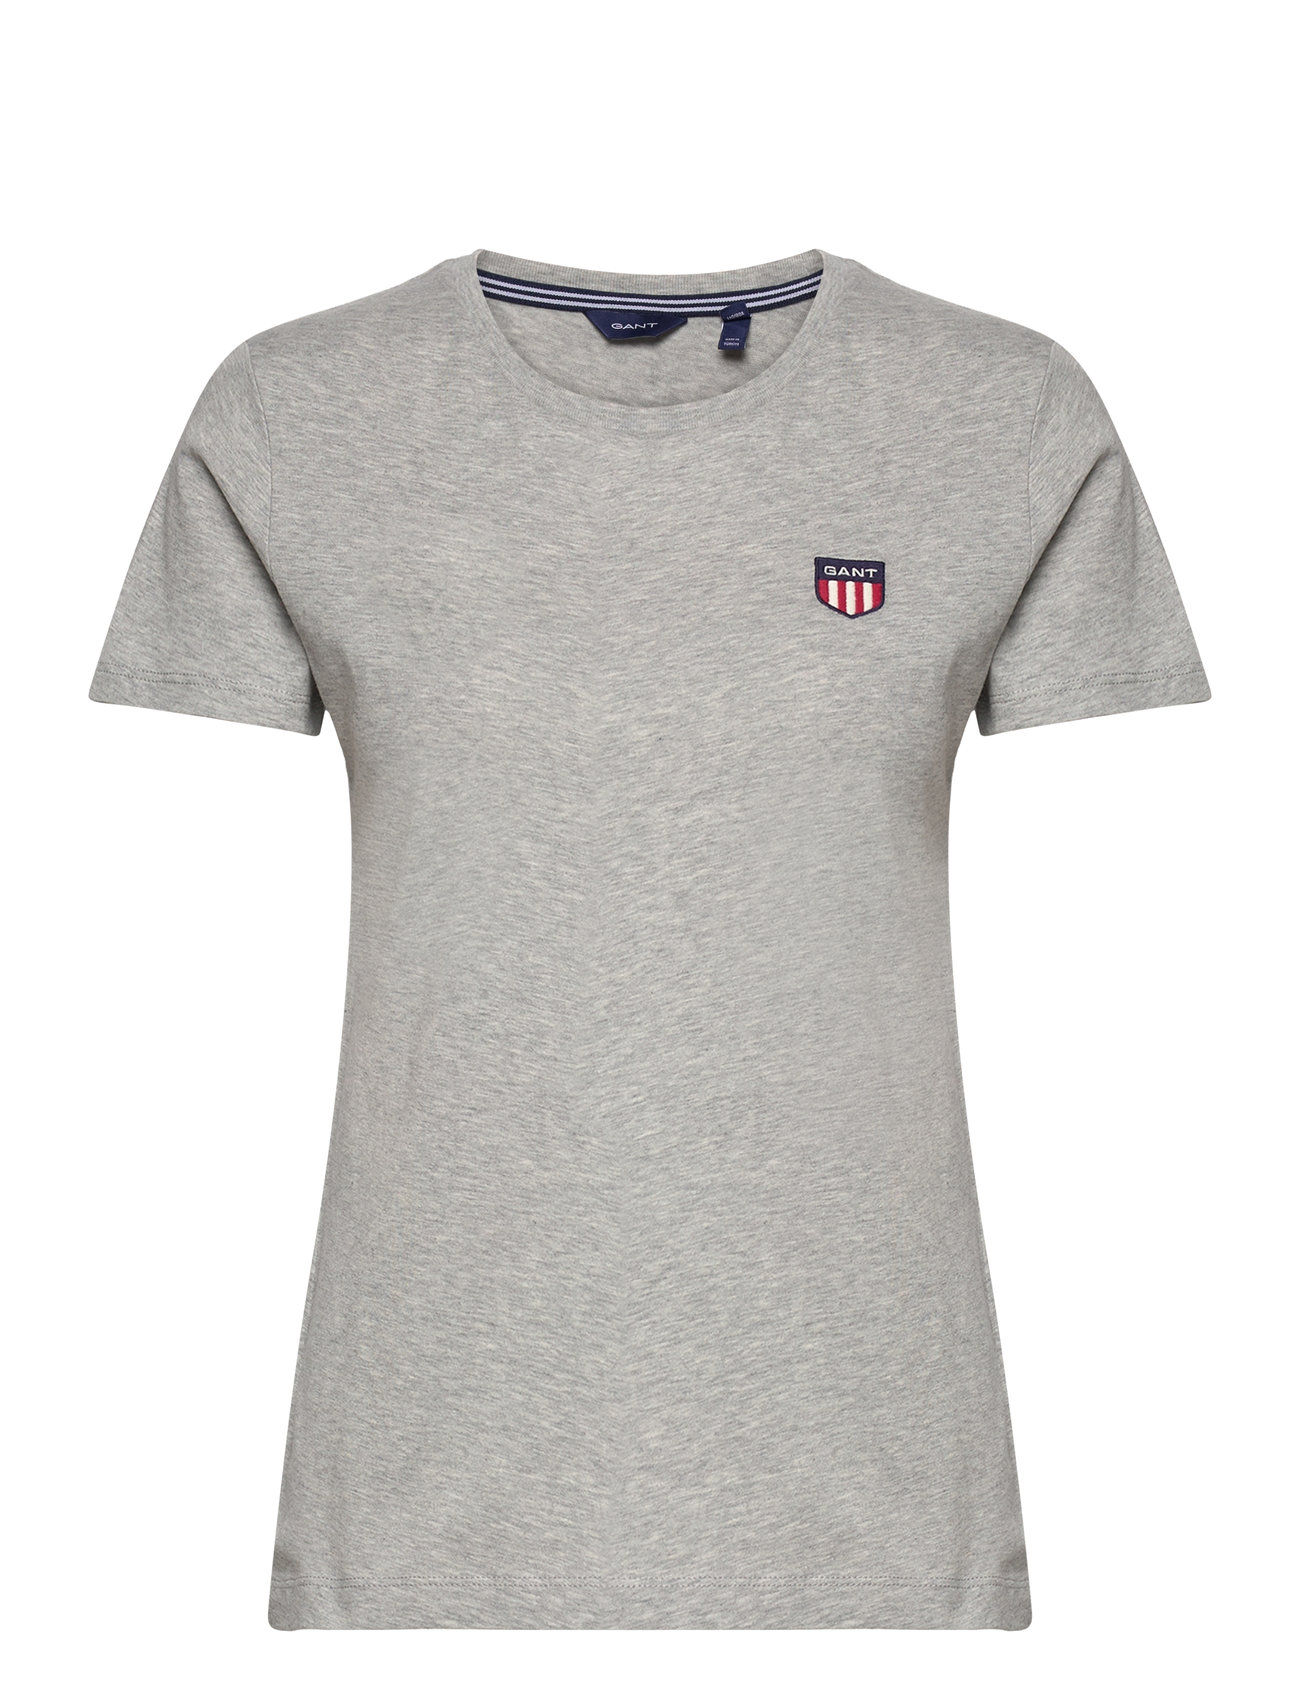 GANT Reg Retro Shield Ss T-shirt – t-shirts & tops – einkaufen bei Booztlet